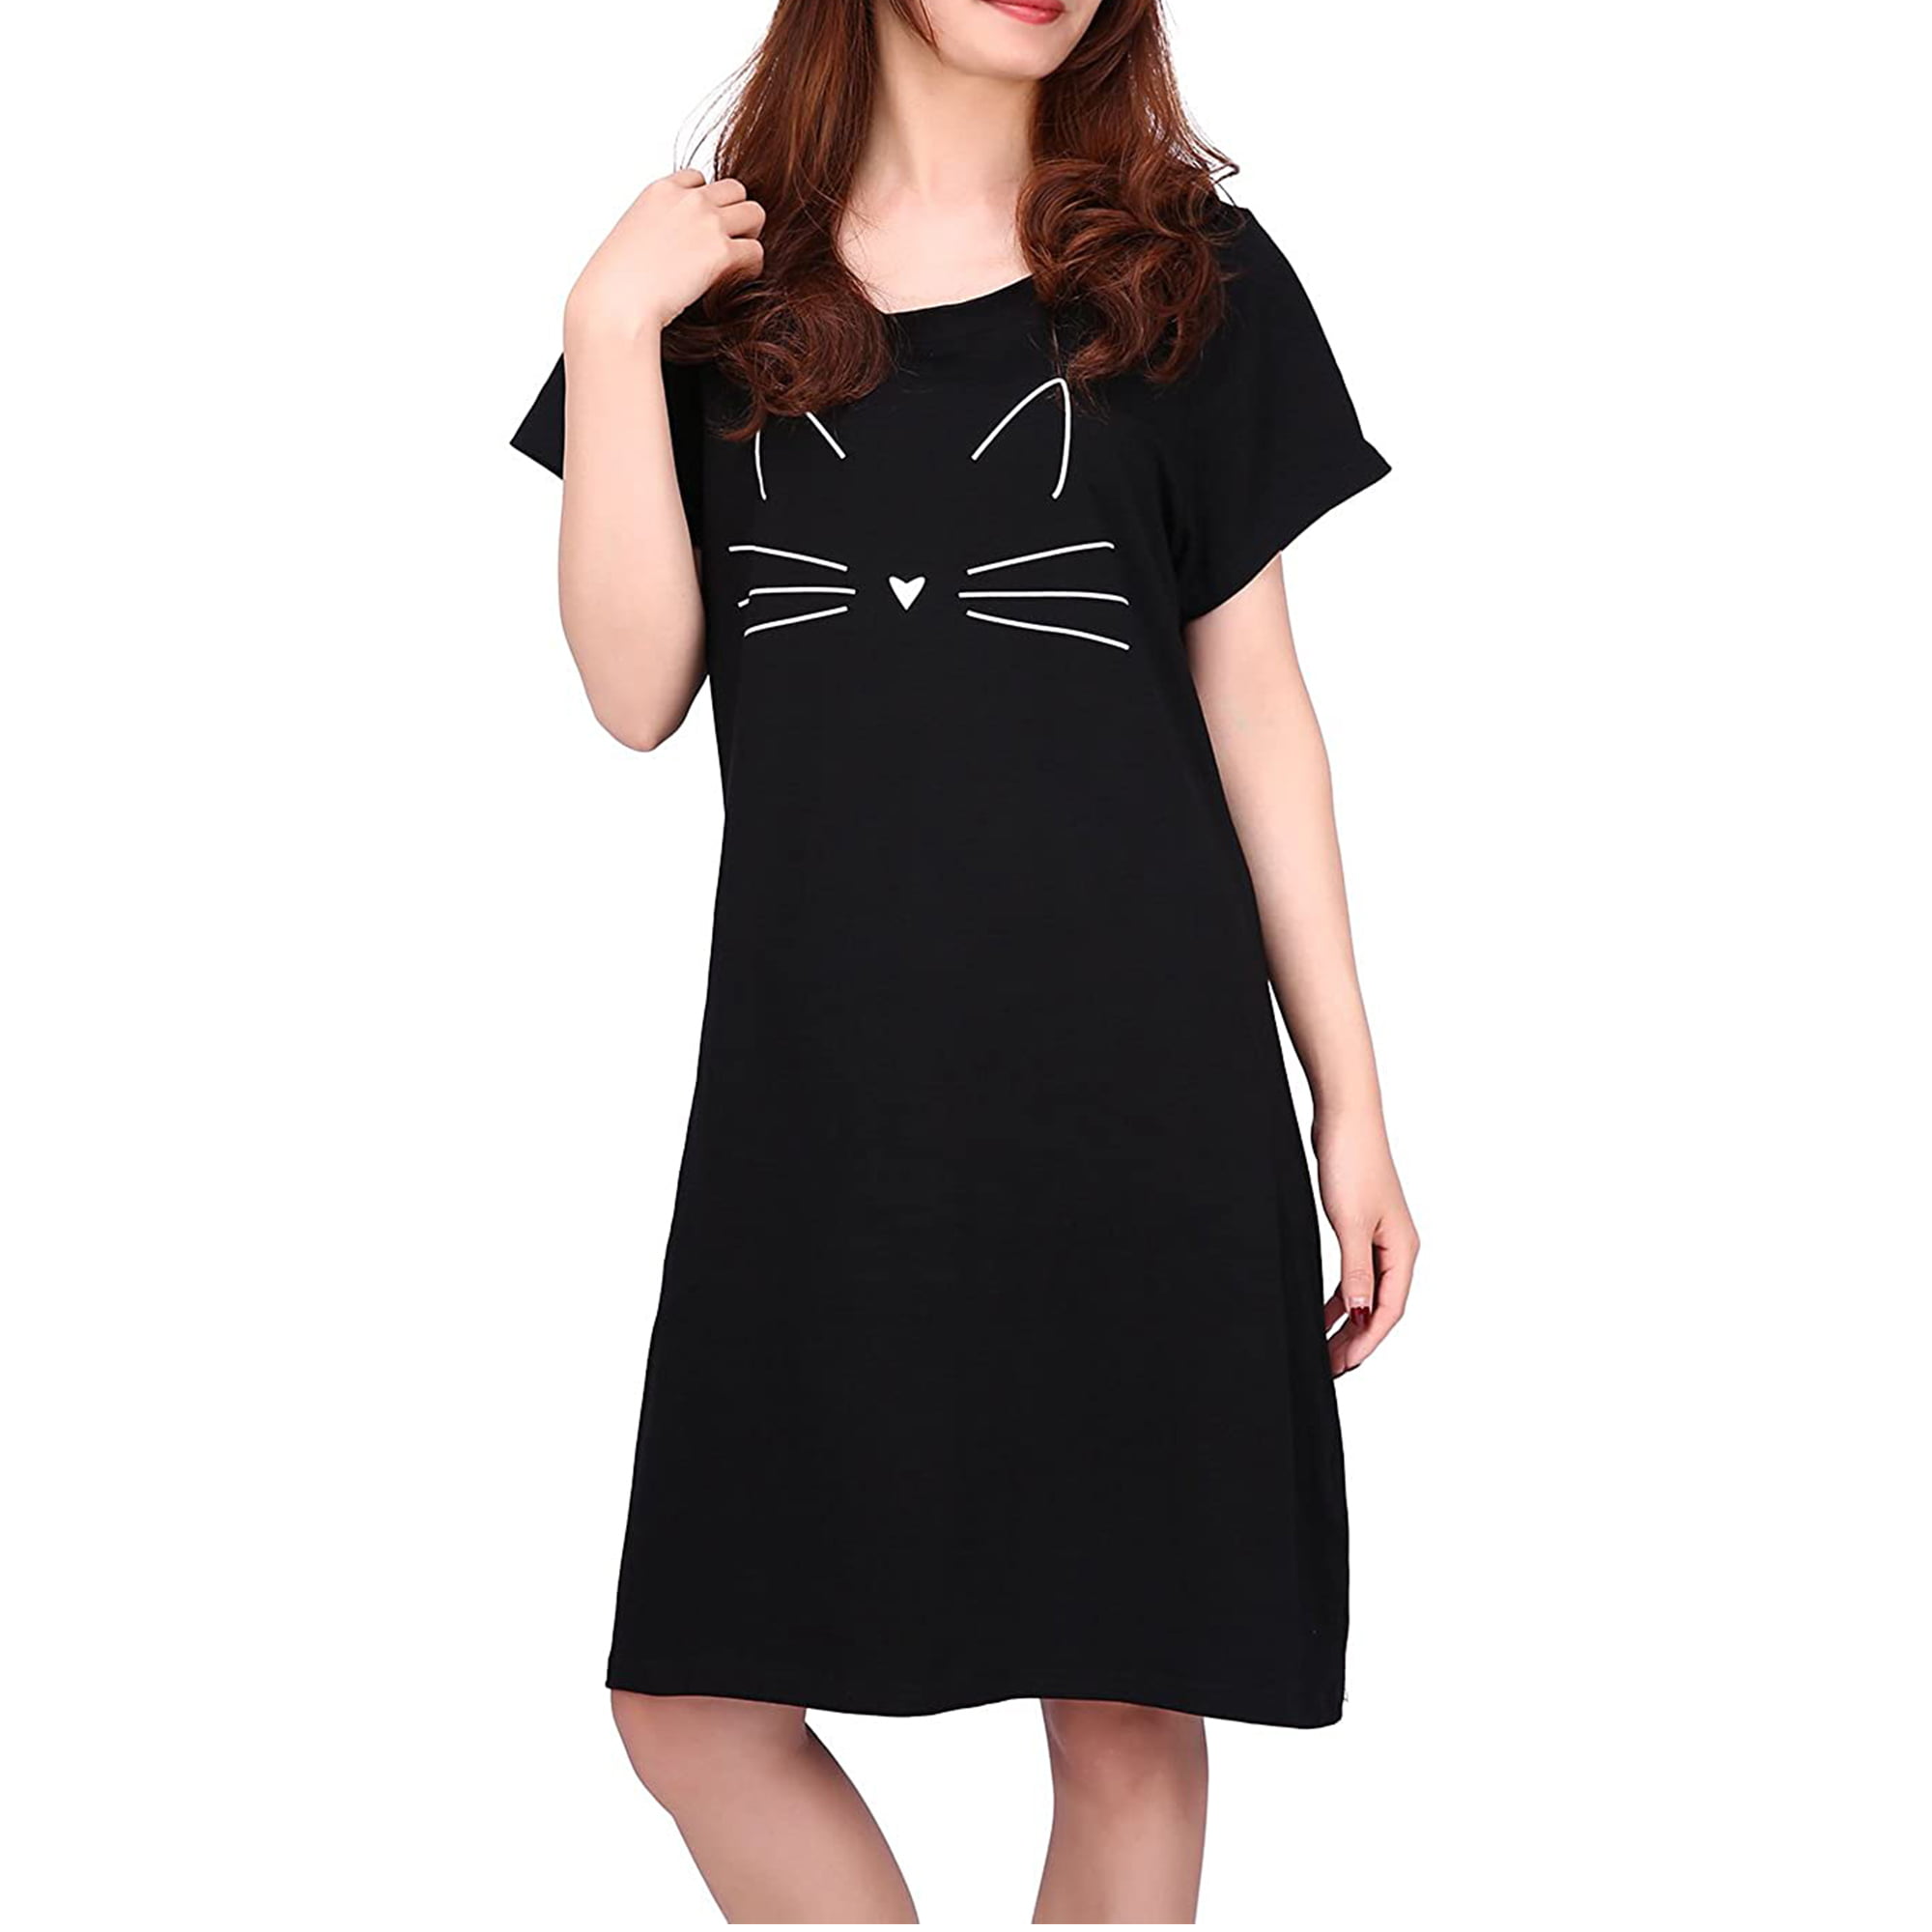 HDE Sleep Shirt for Women 100% Cotton Nightgown S-5X Cute Cat Size S/M ...